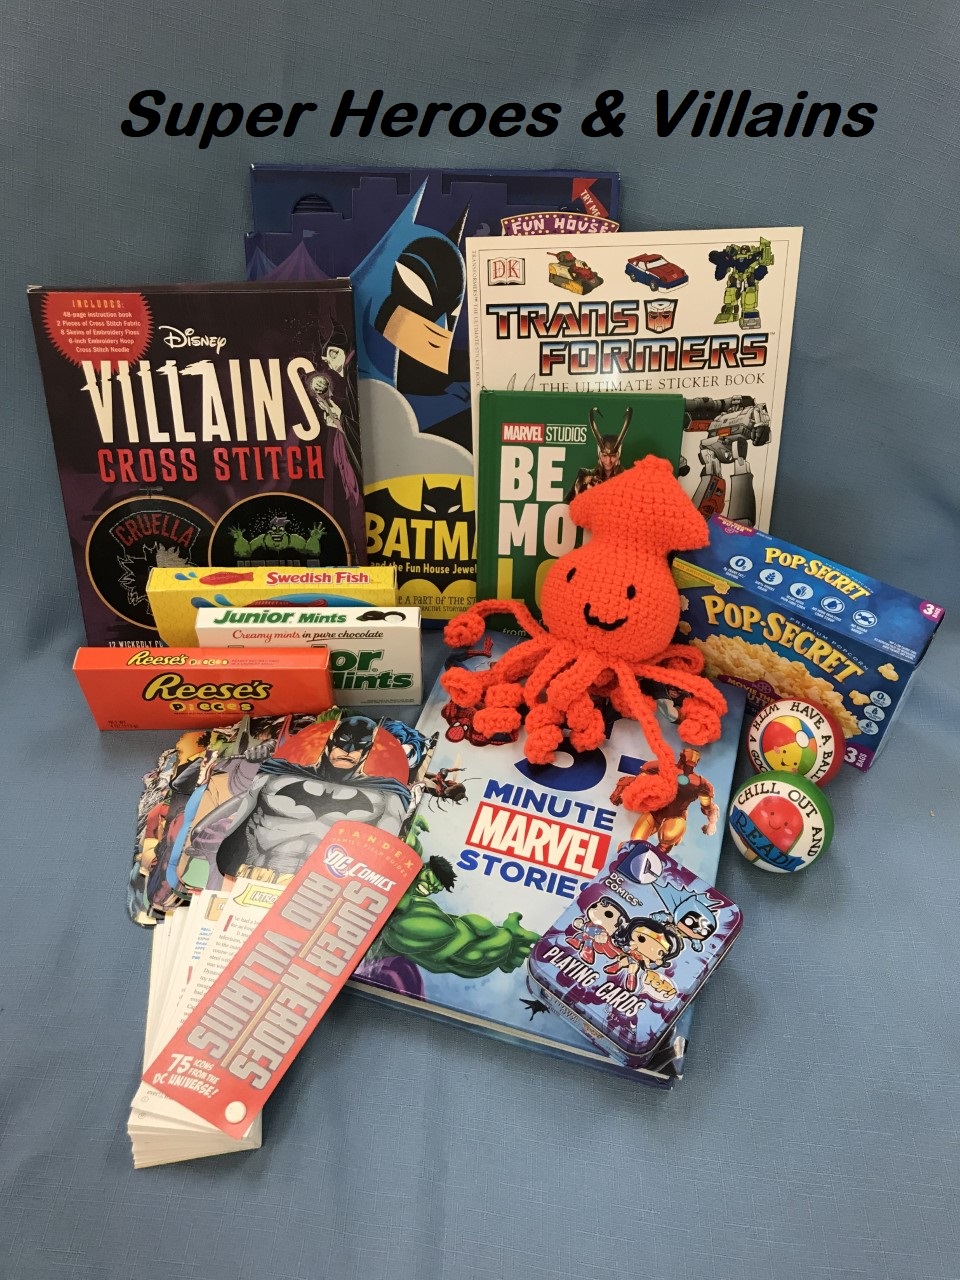 Super Hero books, card games, candy